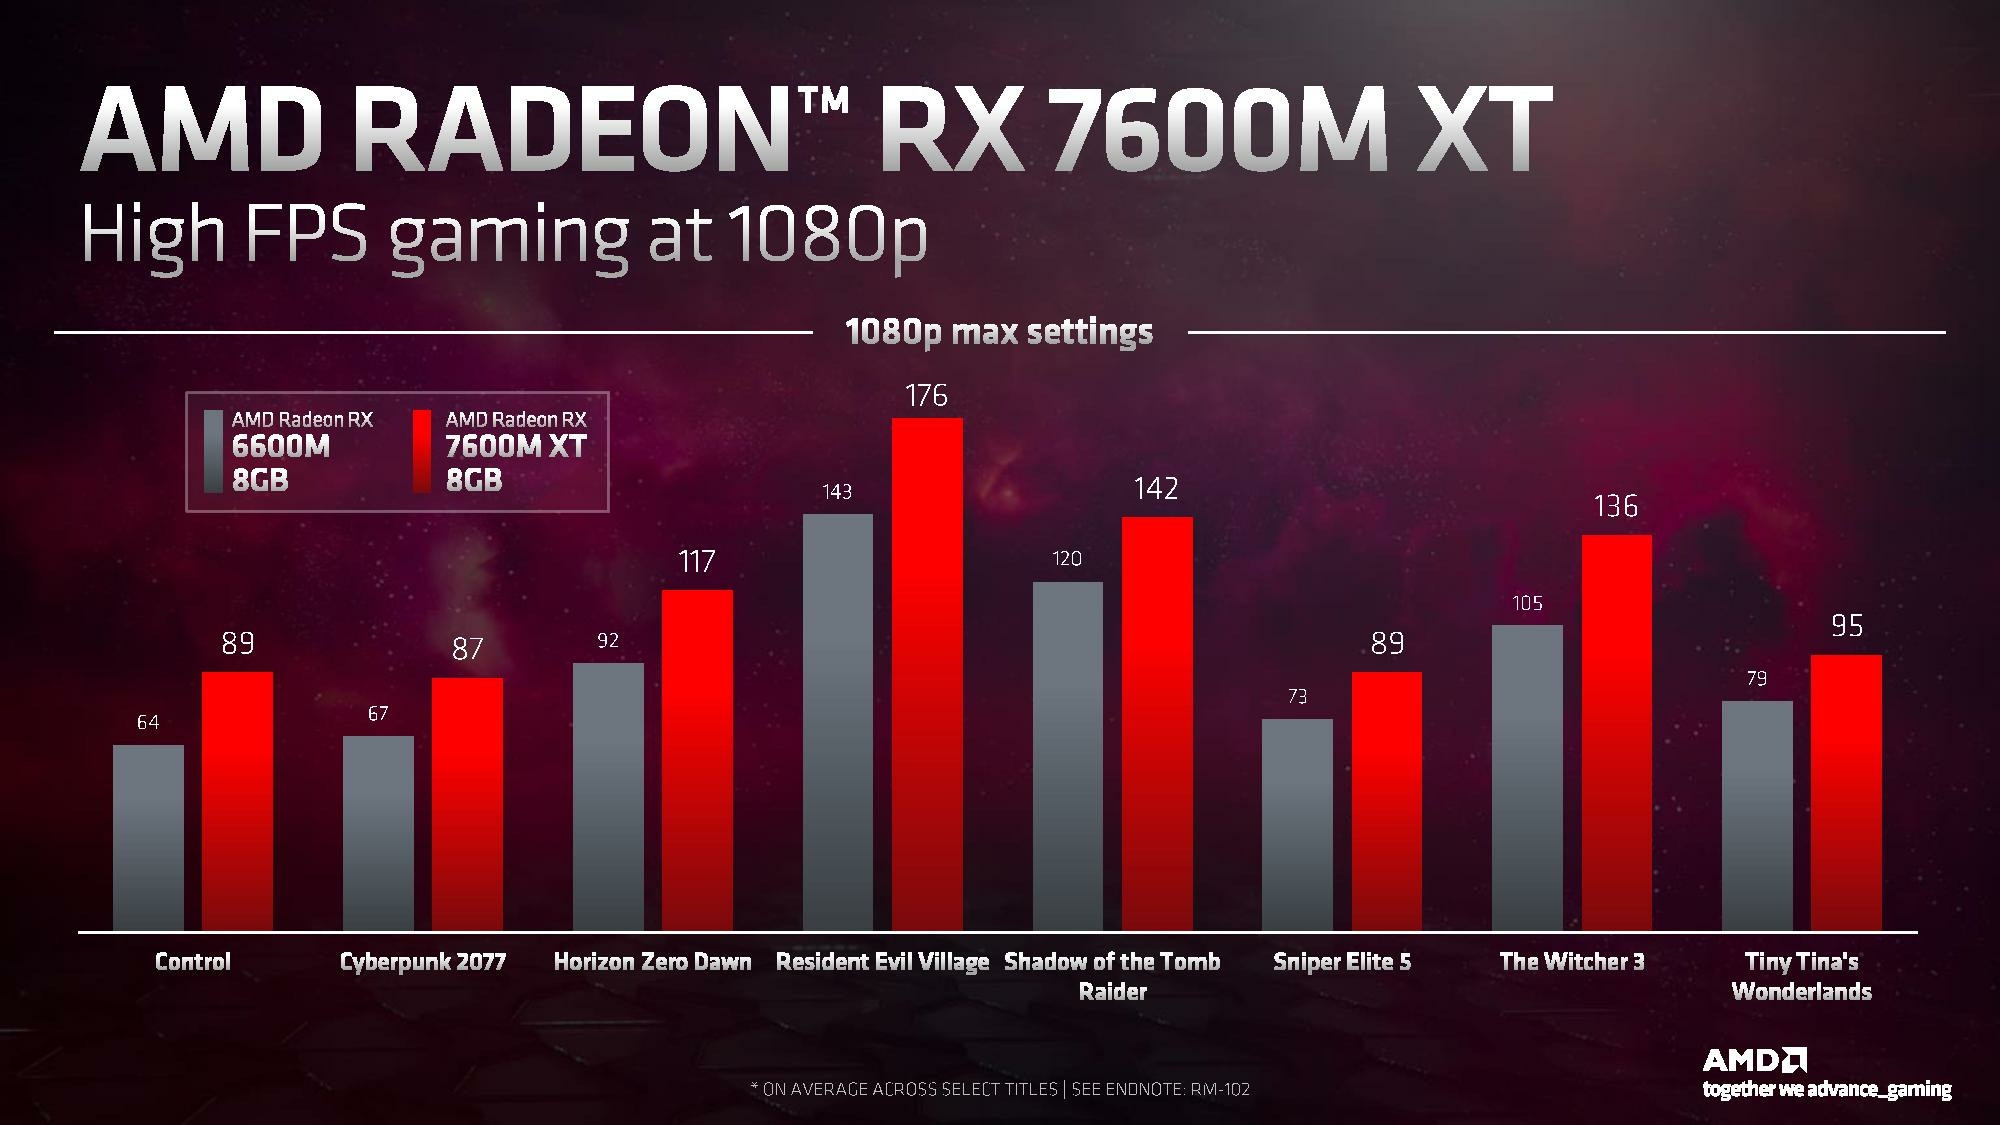 AMD Radeon RX 7600M XT performances